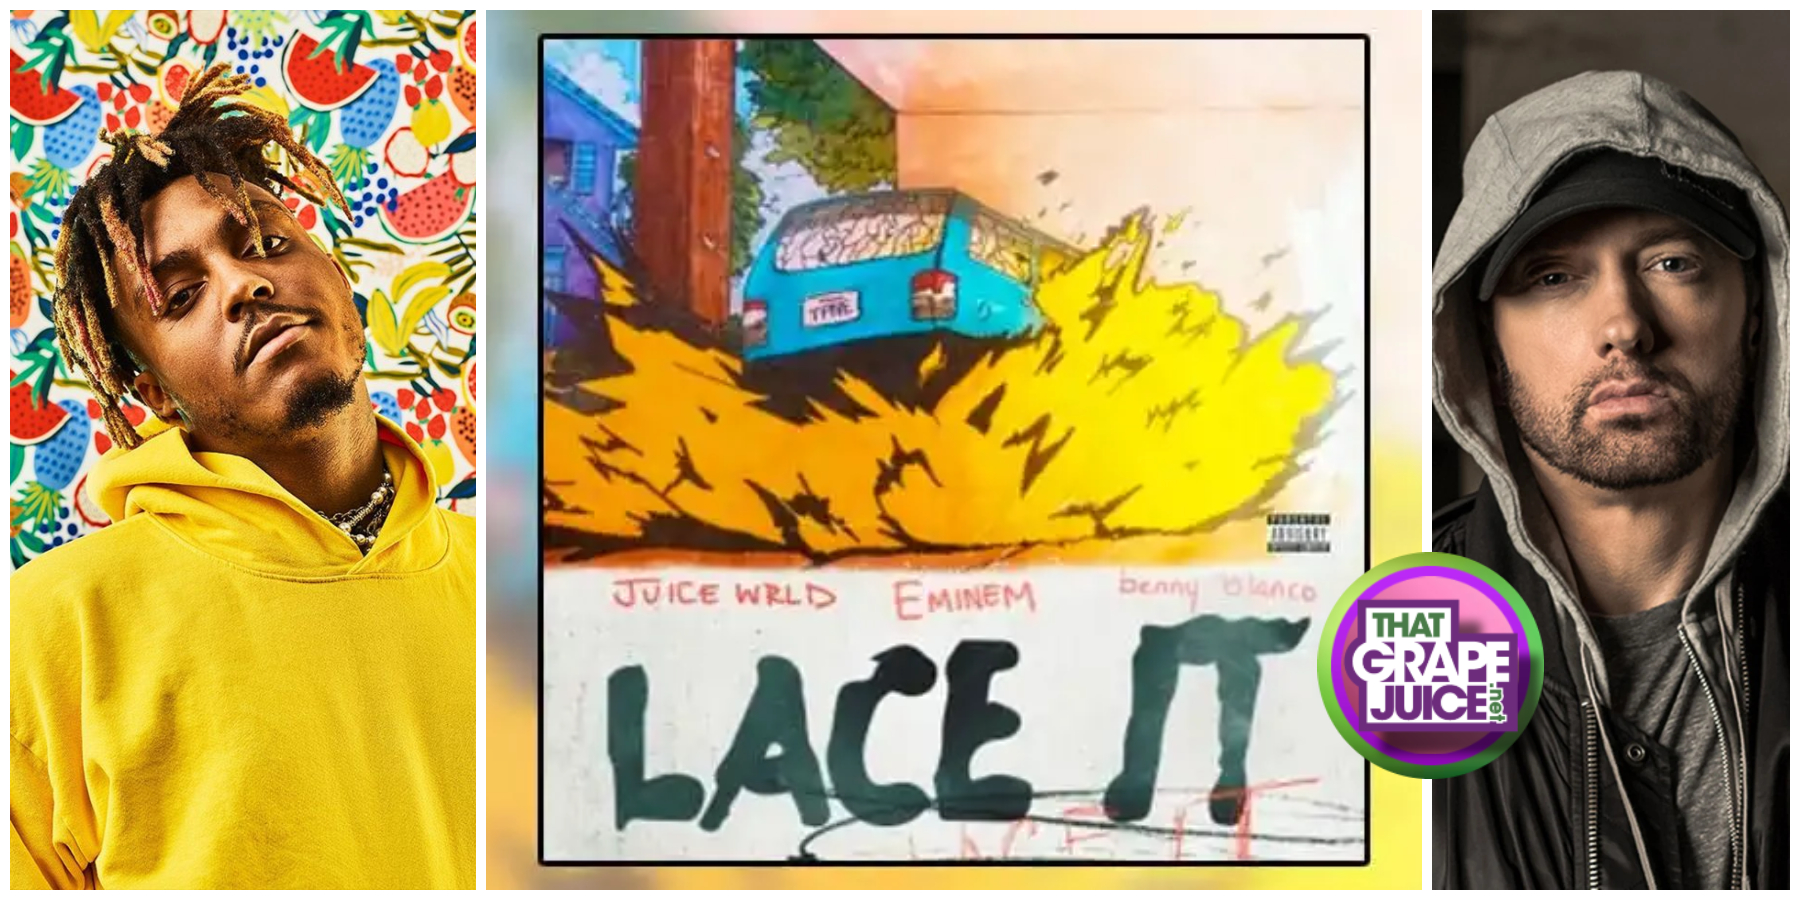 New Song: Juice WRLD, Eminem, & Benny Blanco - 'Lace It' - That Grape Juice